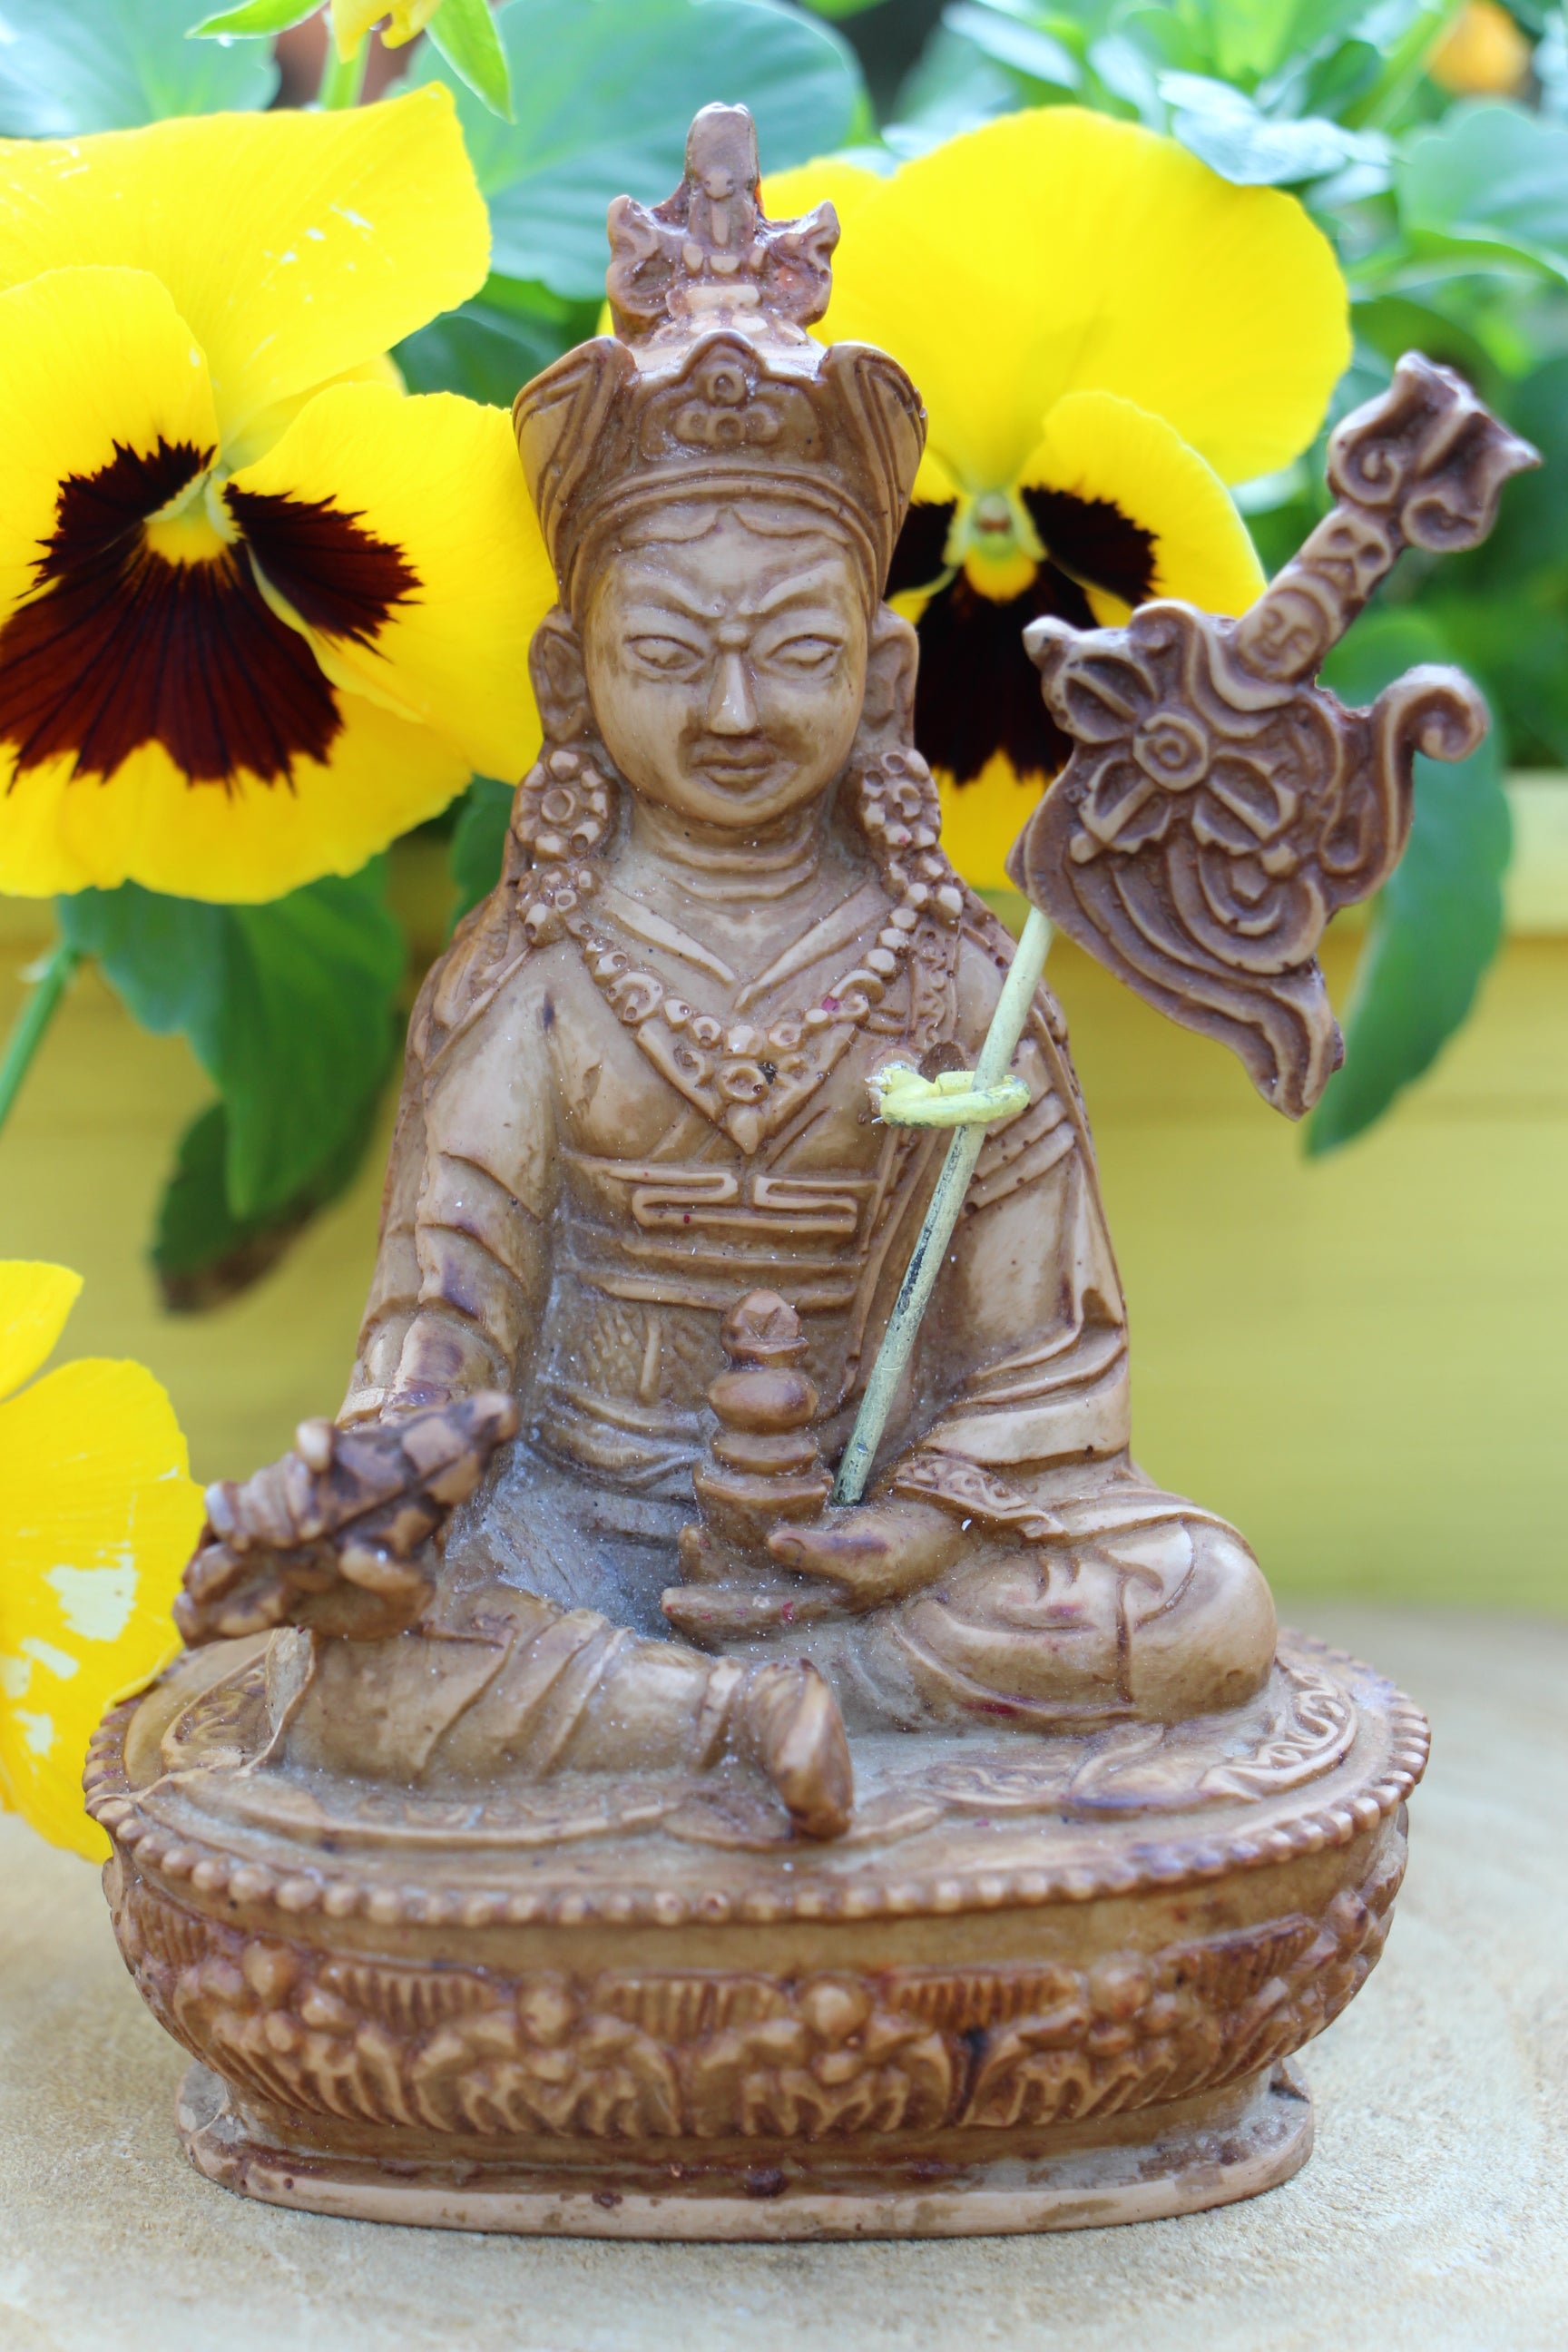 Statue of Guru Rinpoche